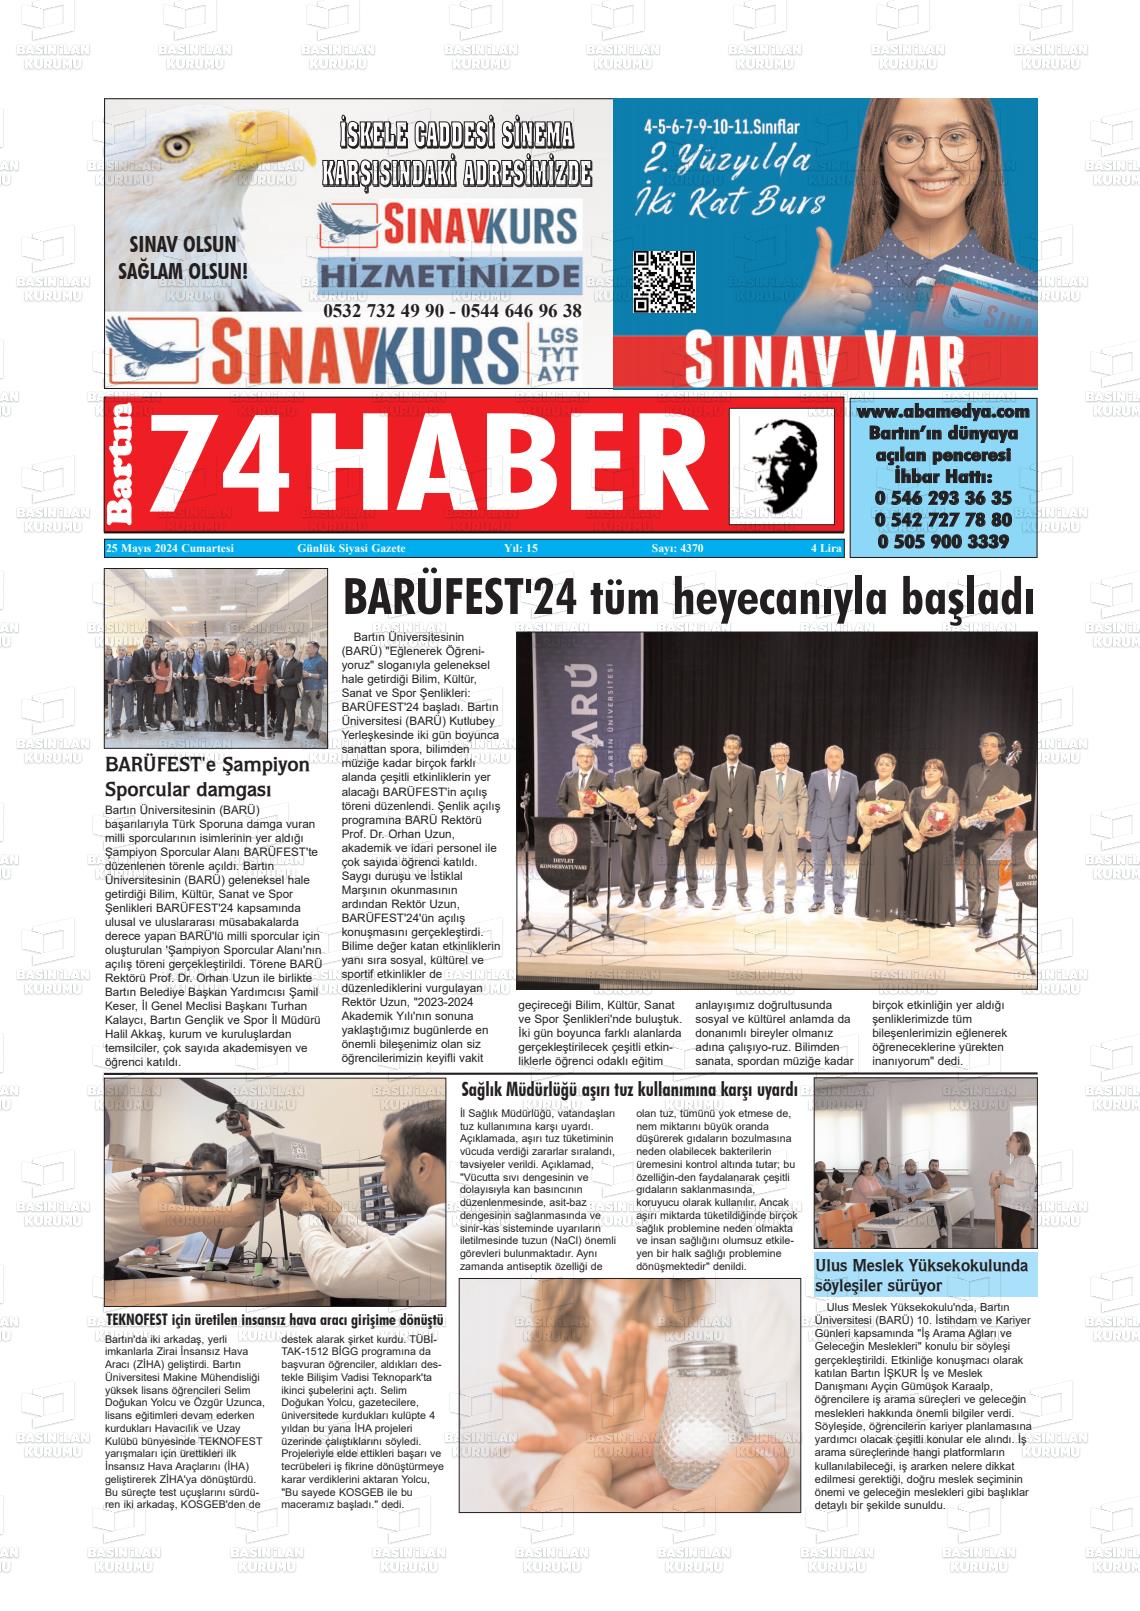 BARTIN 74 HABER Gazetesi